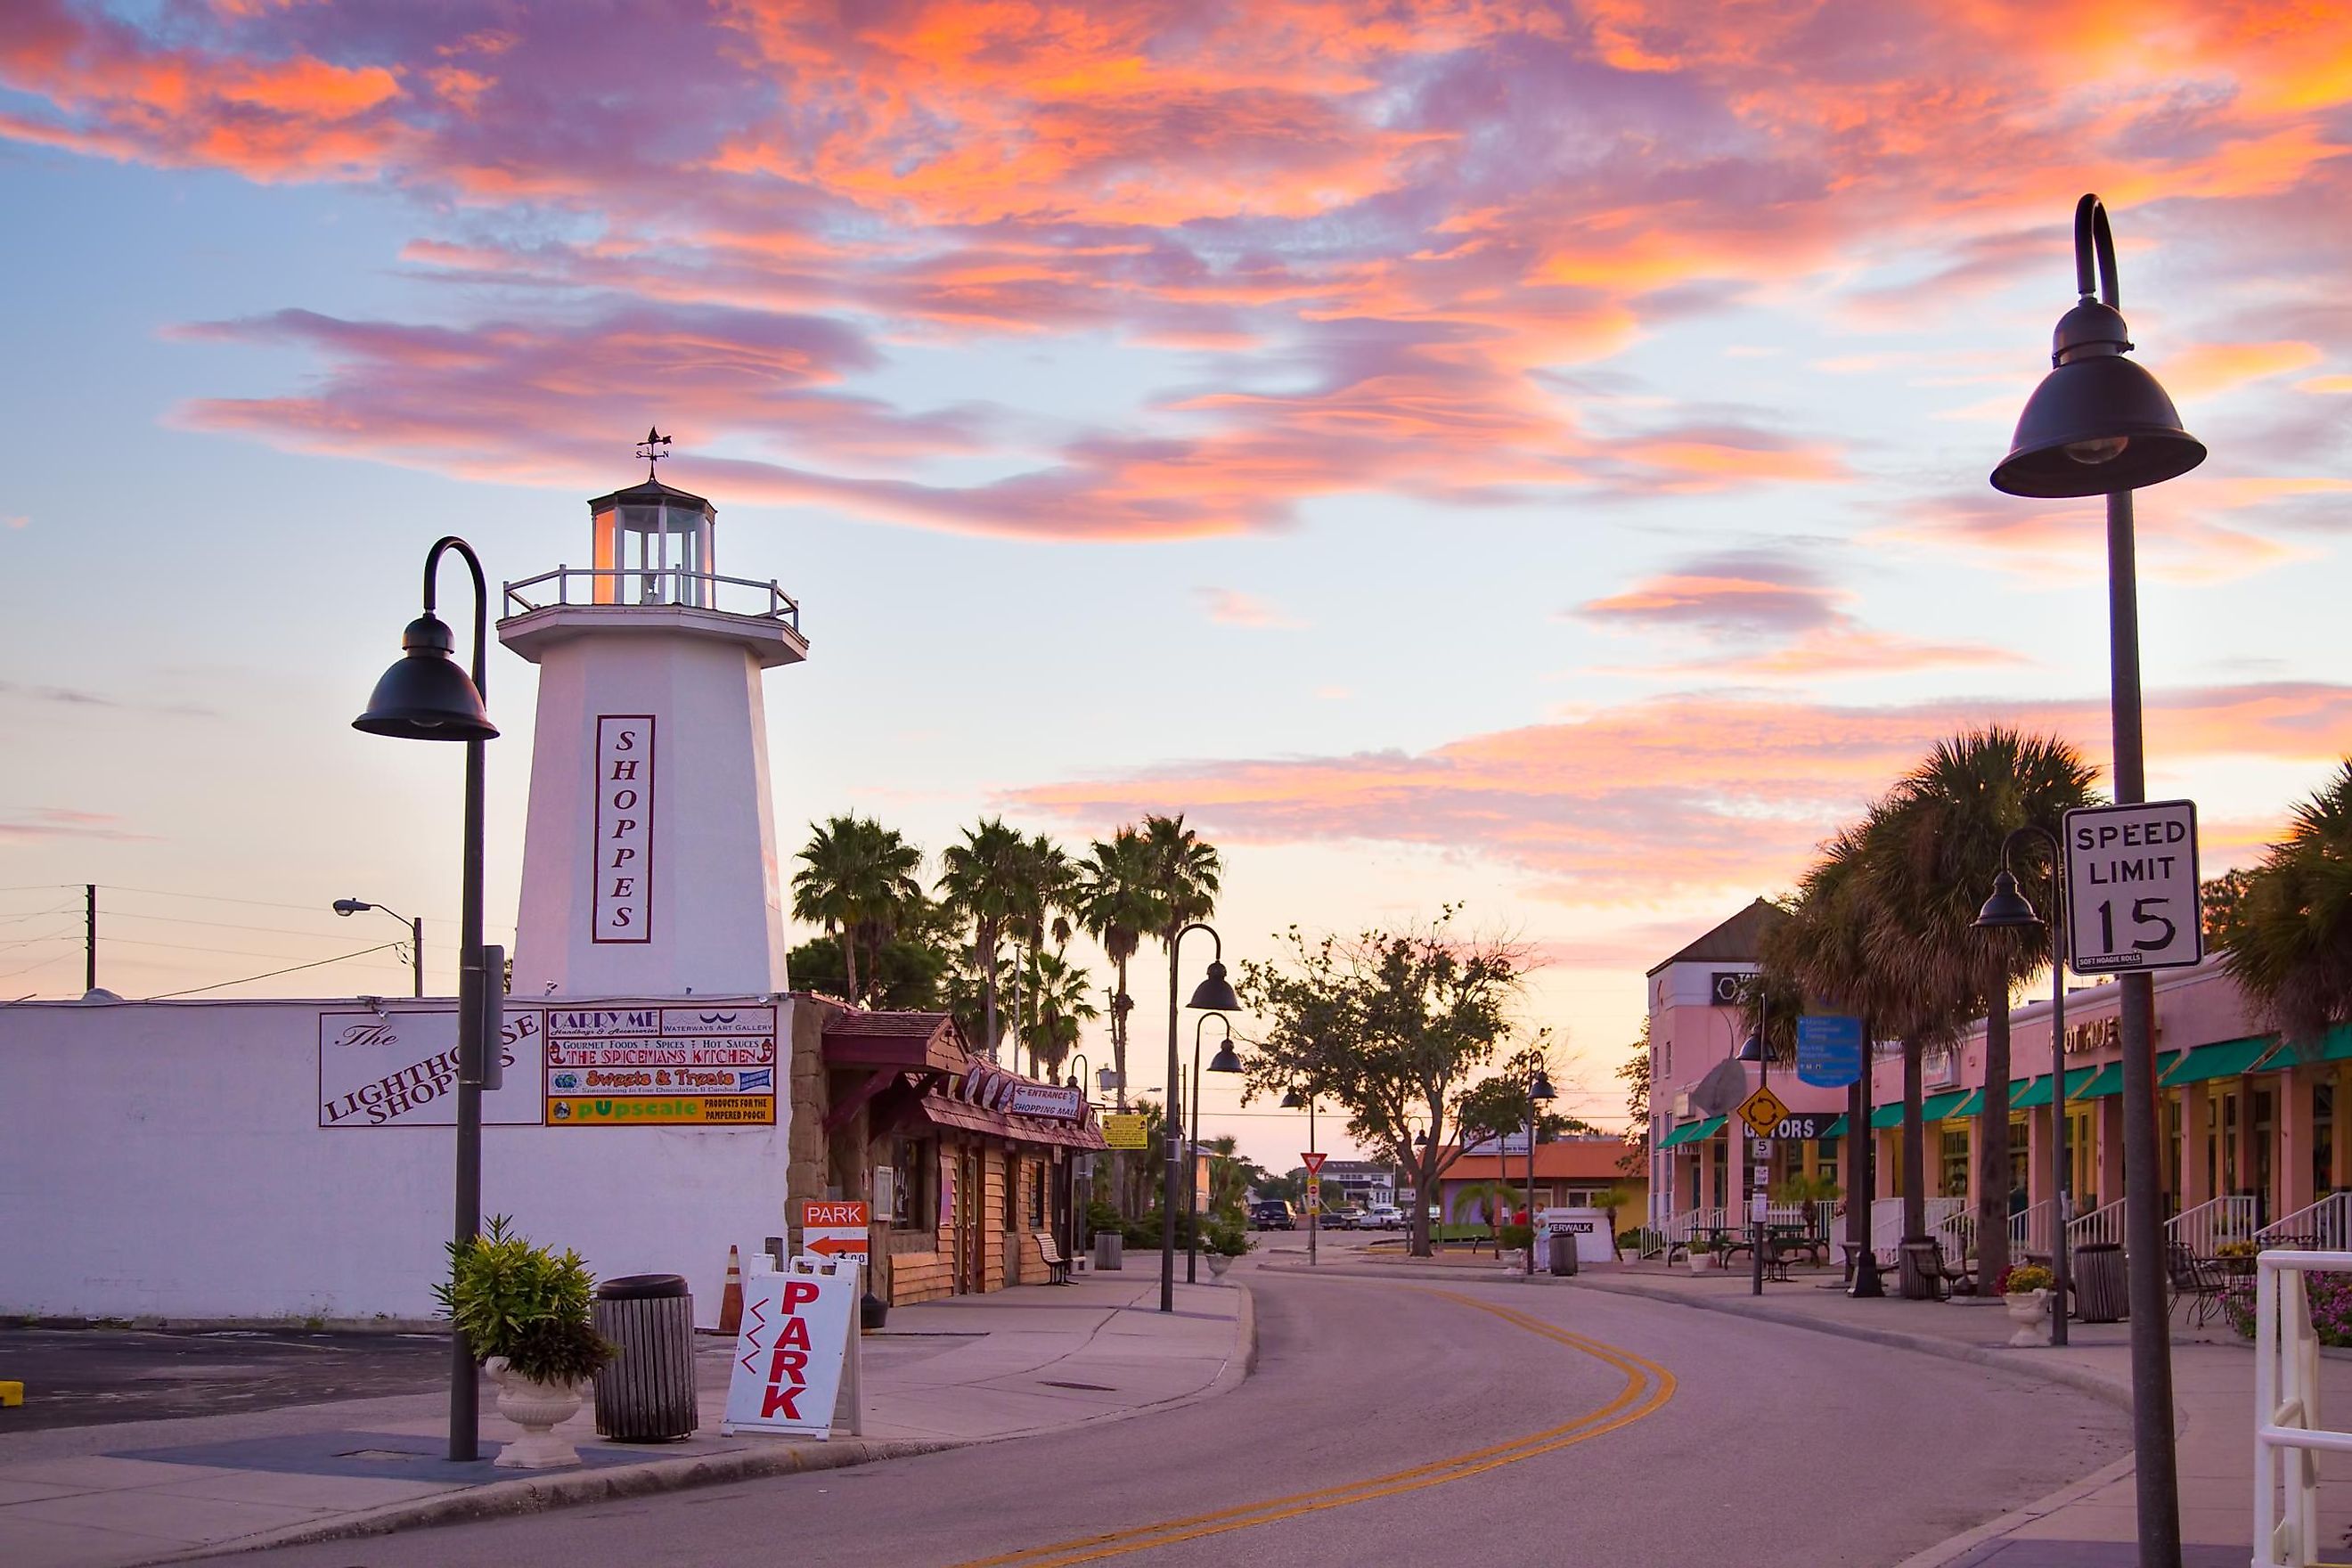 View of downtown Tarpon Springs, Florida at sunset, via littleny / iStock.com